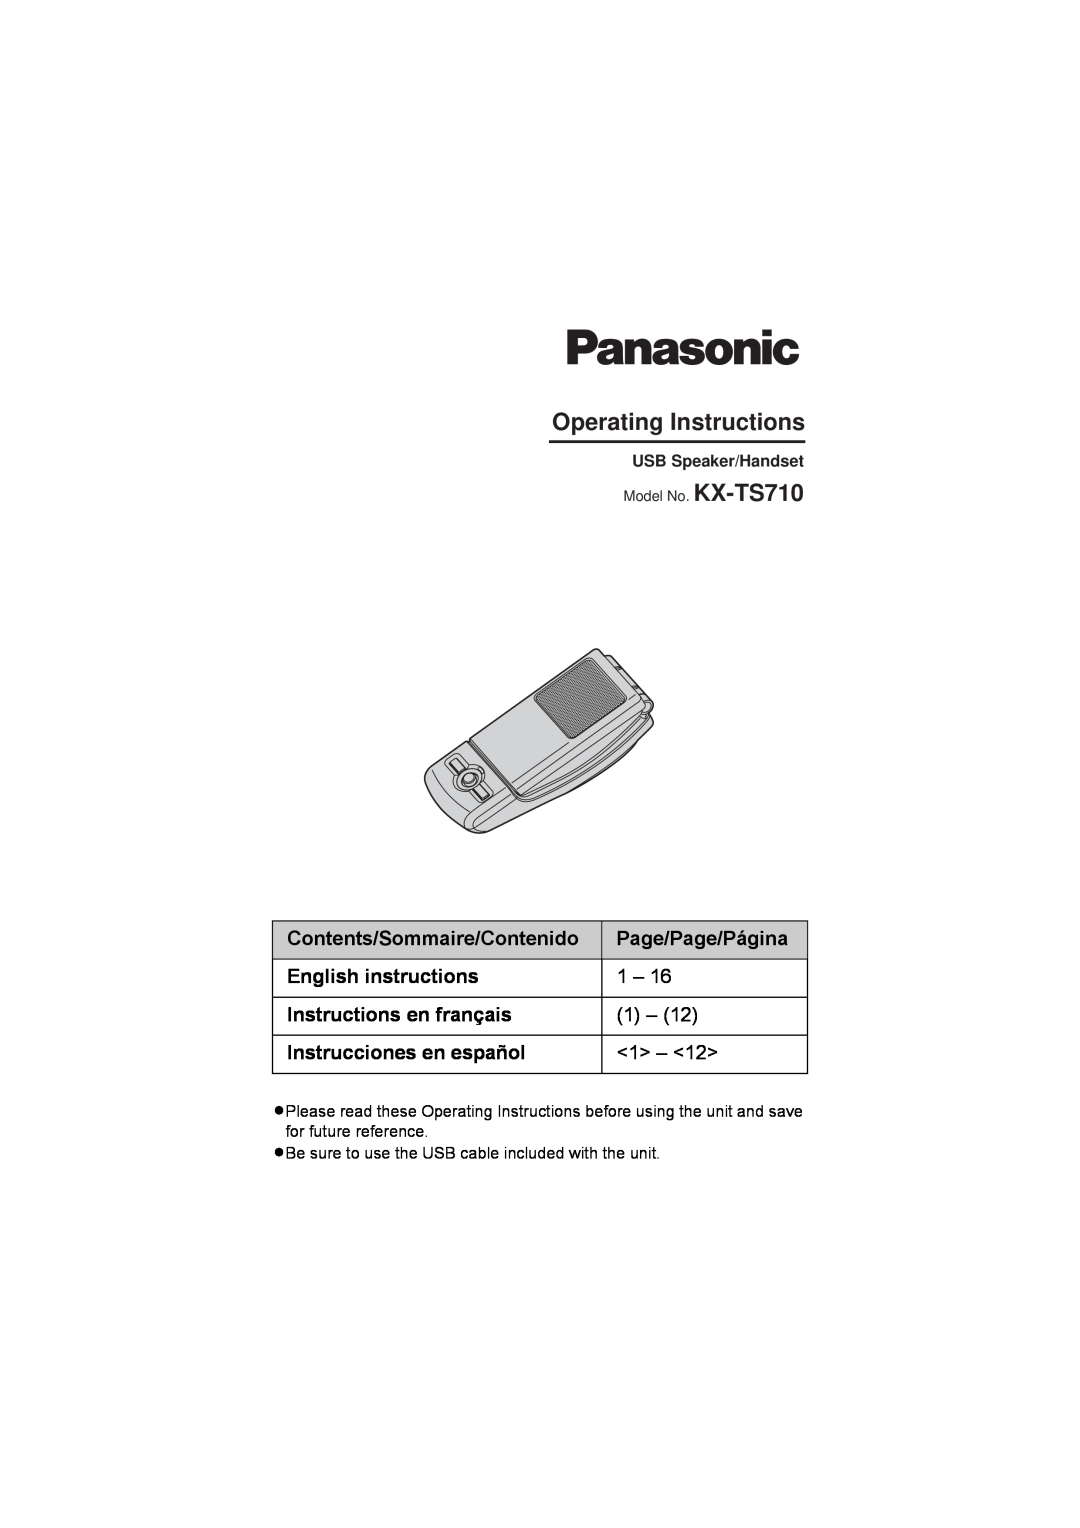 Panasonic KX-TS710 operating instructions Operating Instructions, Contents/Sommaire/Contenido, Page/Page/Página 